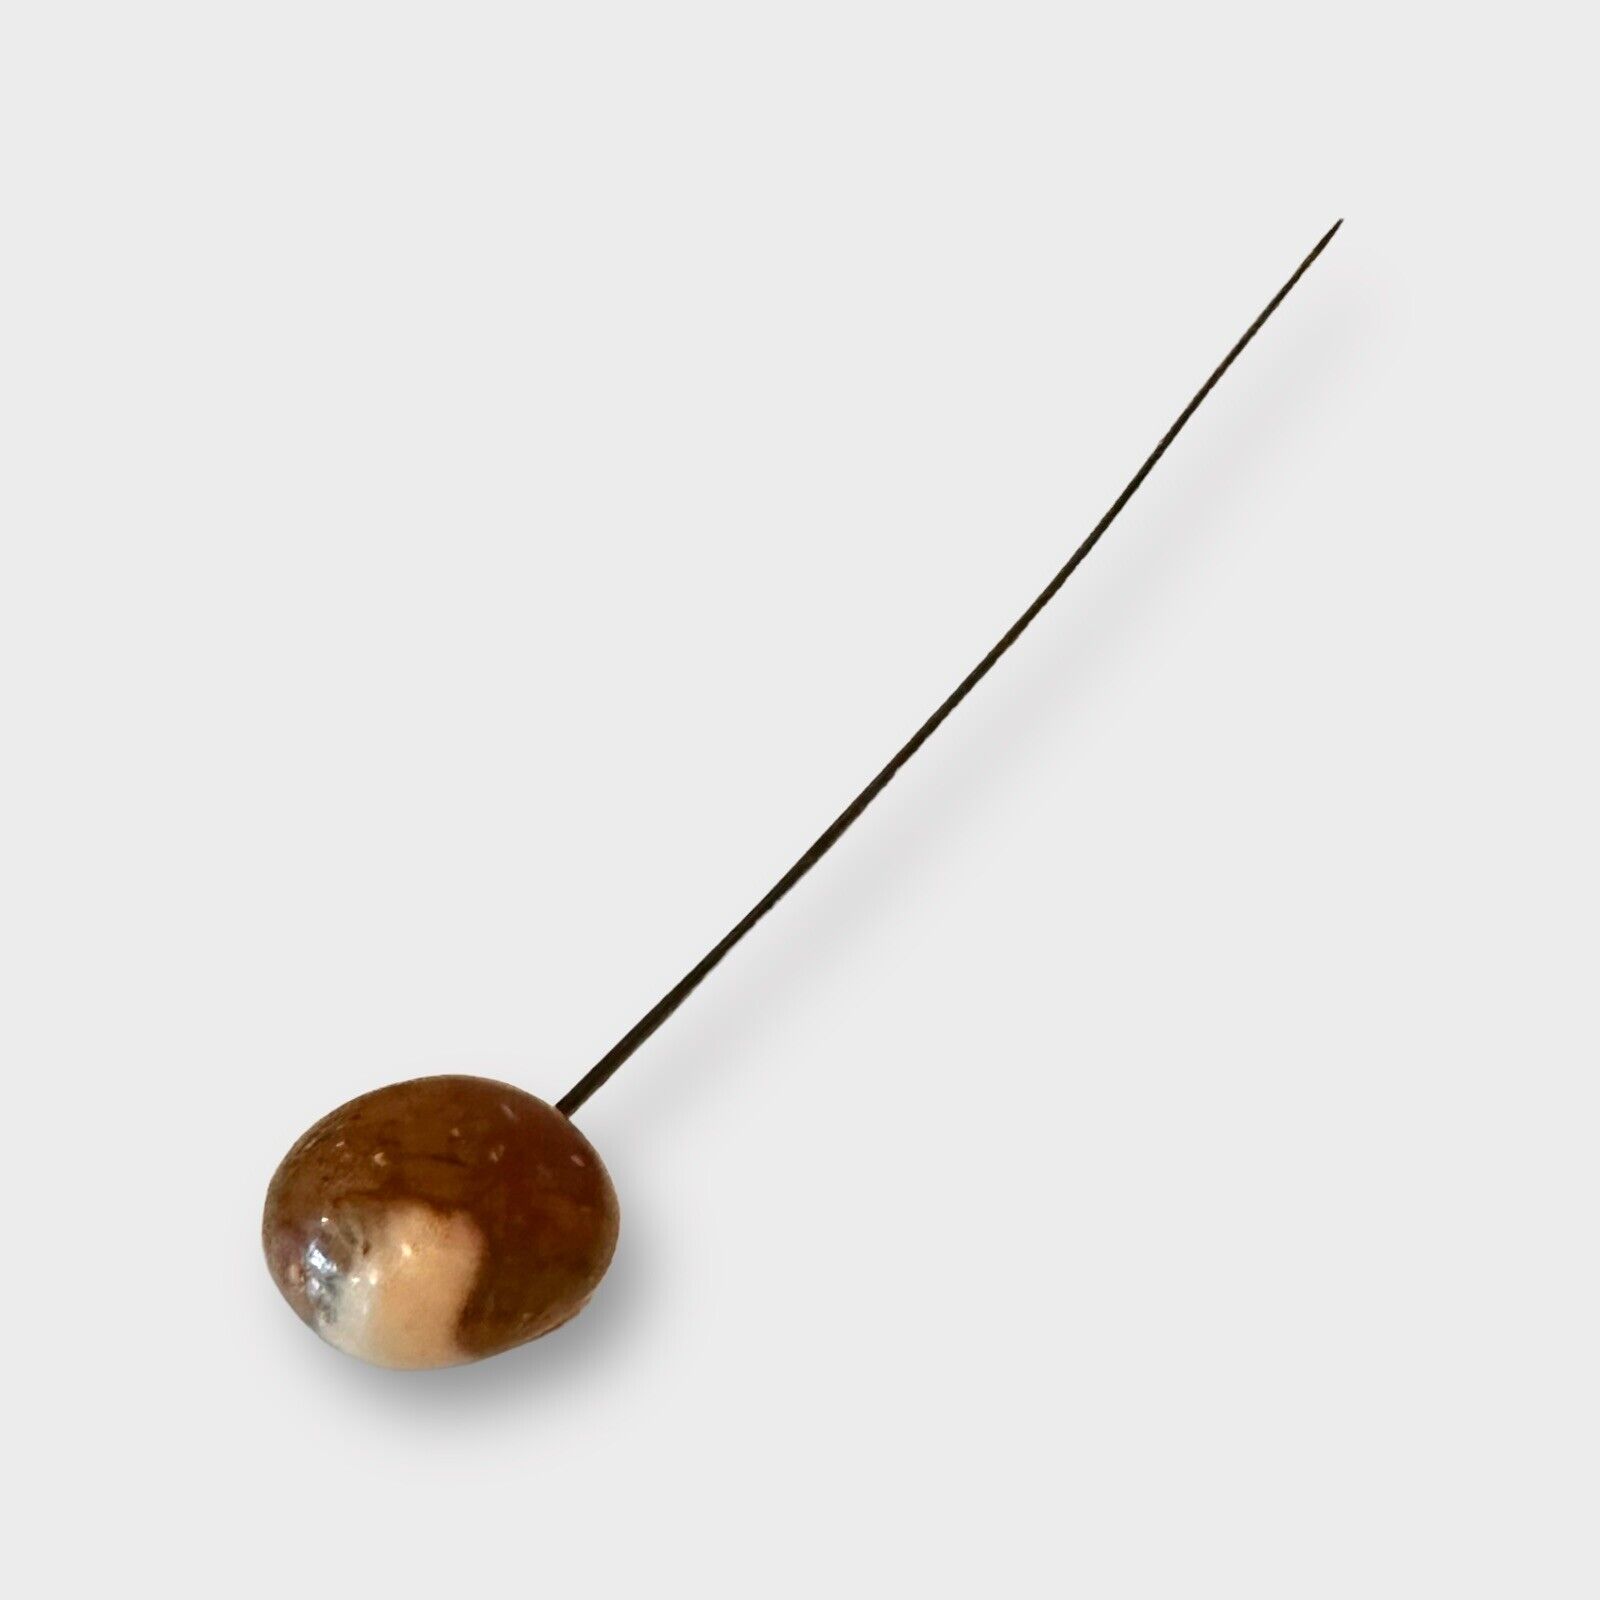 Vintage Stone Hatpin Stick Pin Brown Marbled Swirl Metal 10” Antique